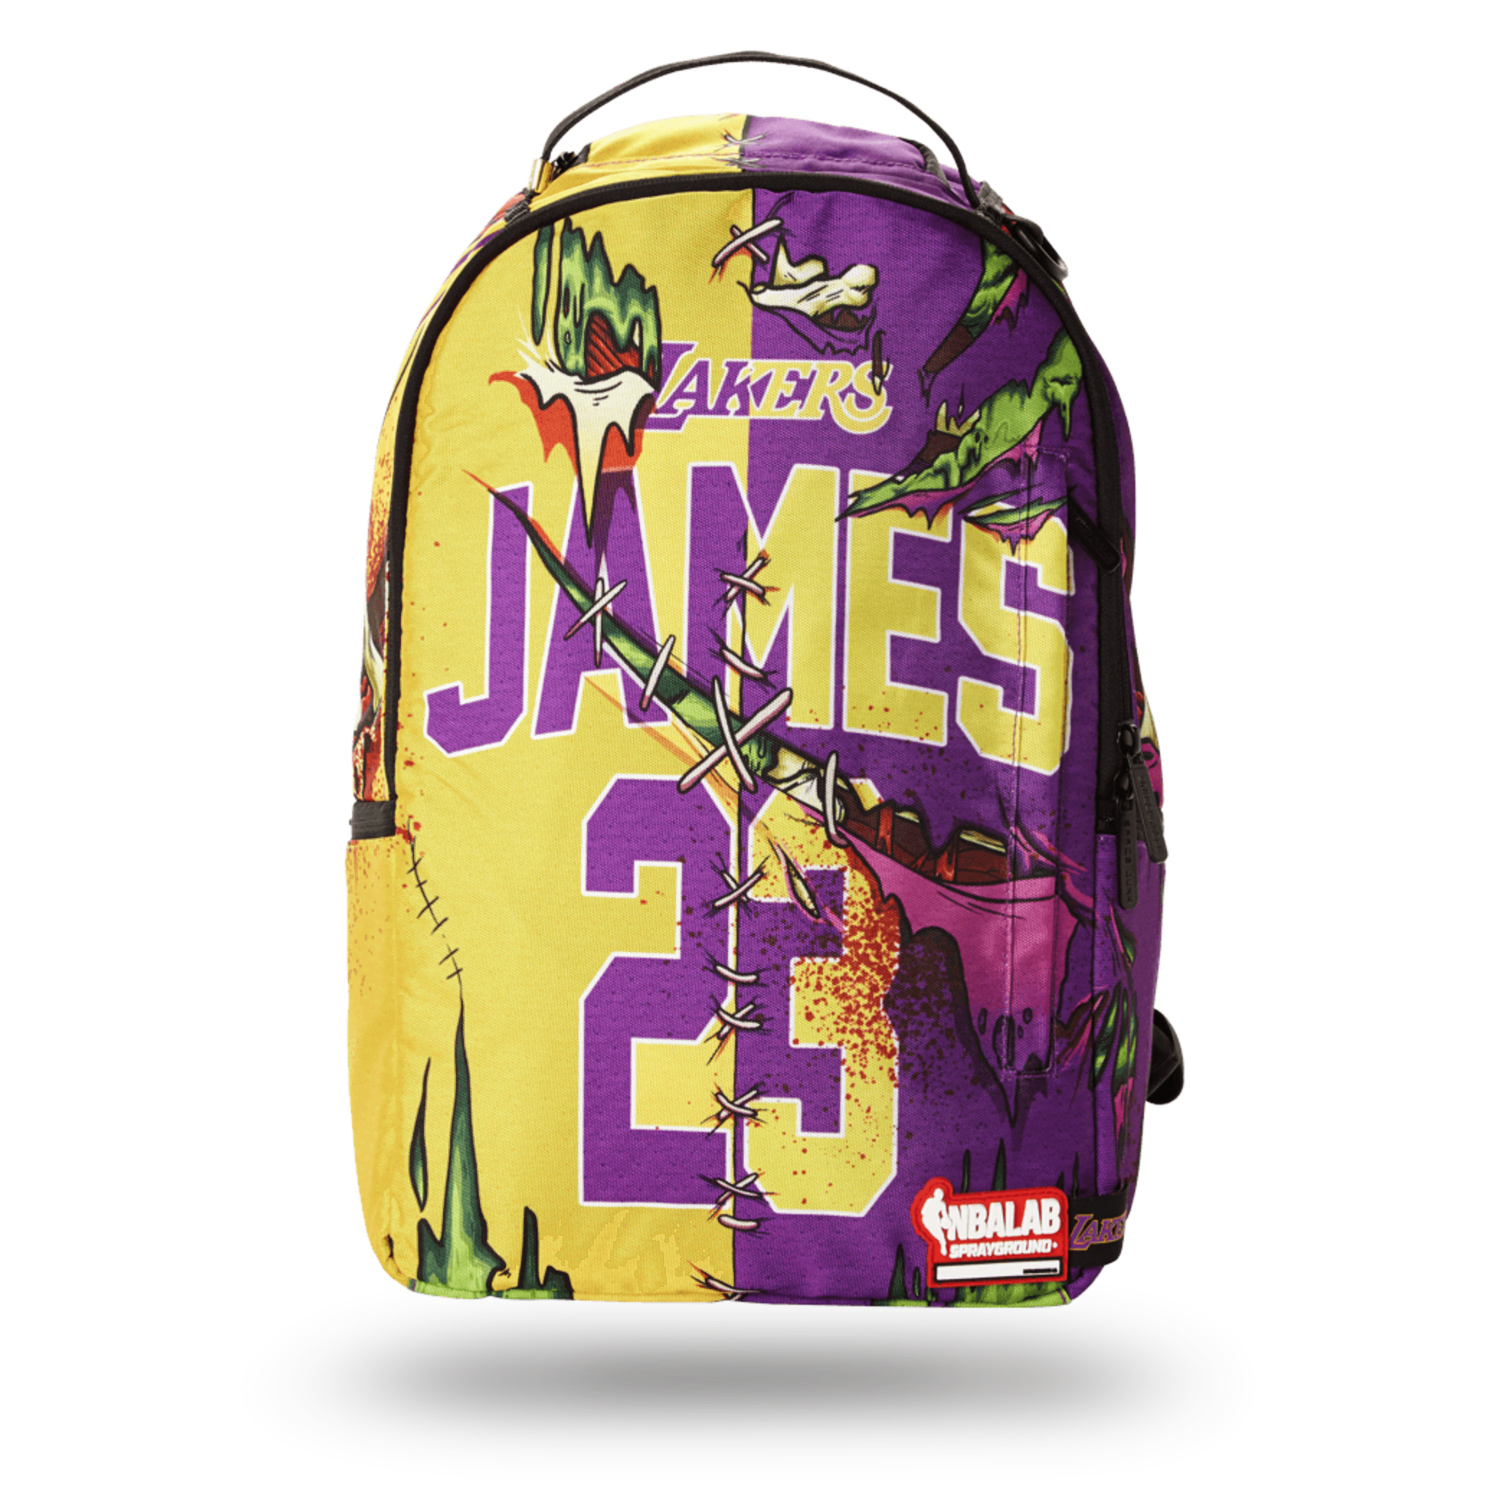 sprayground backpacks basketball